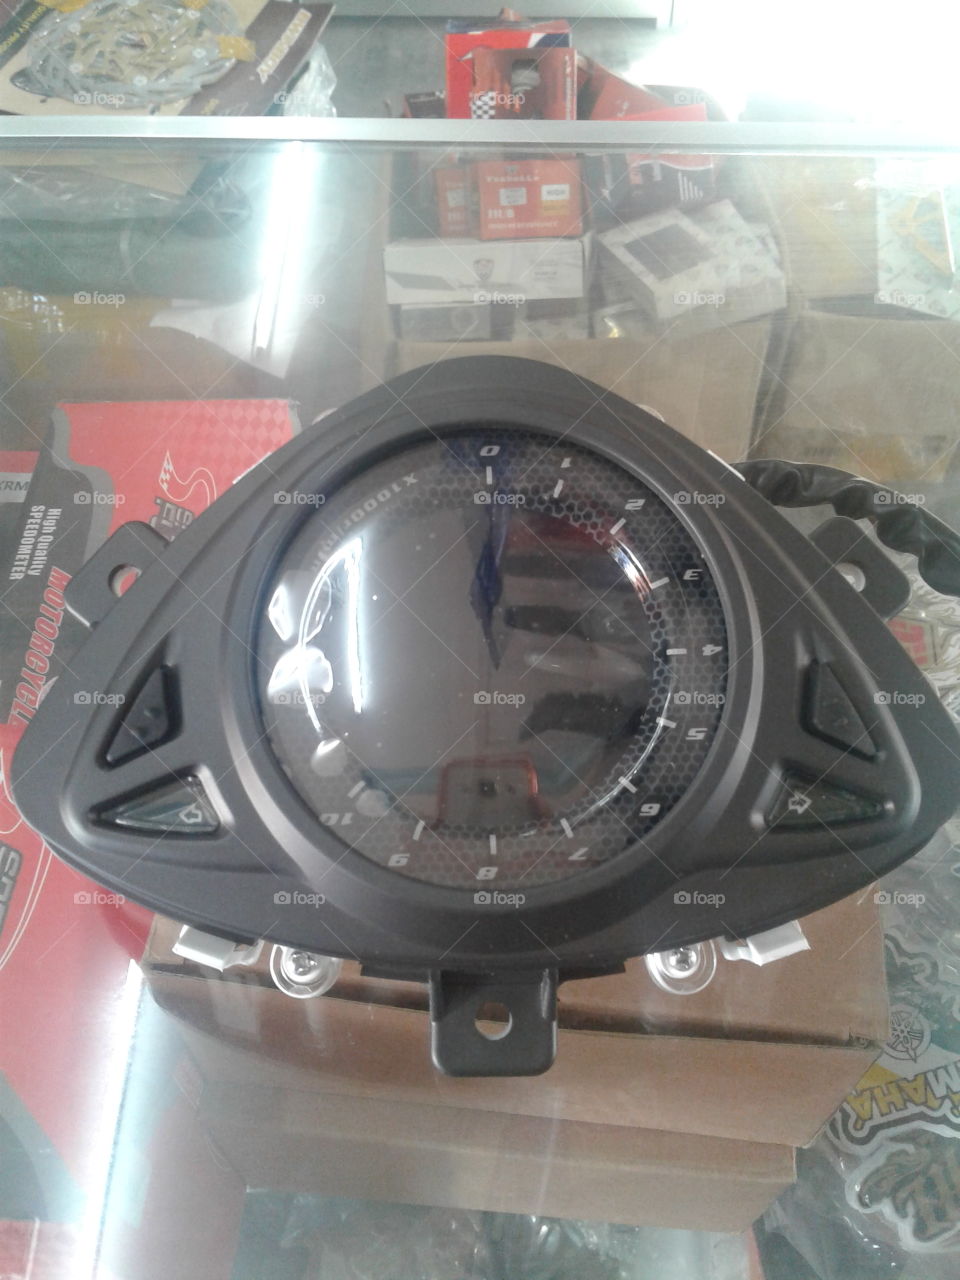 Speedometer
motorparts